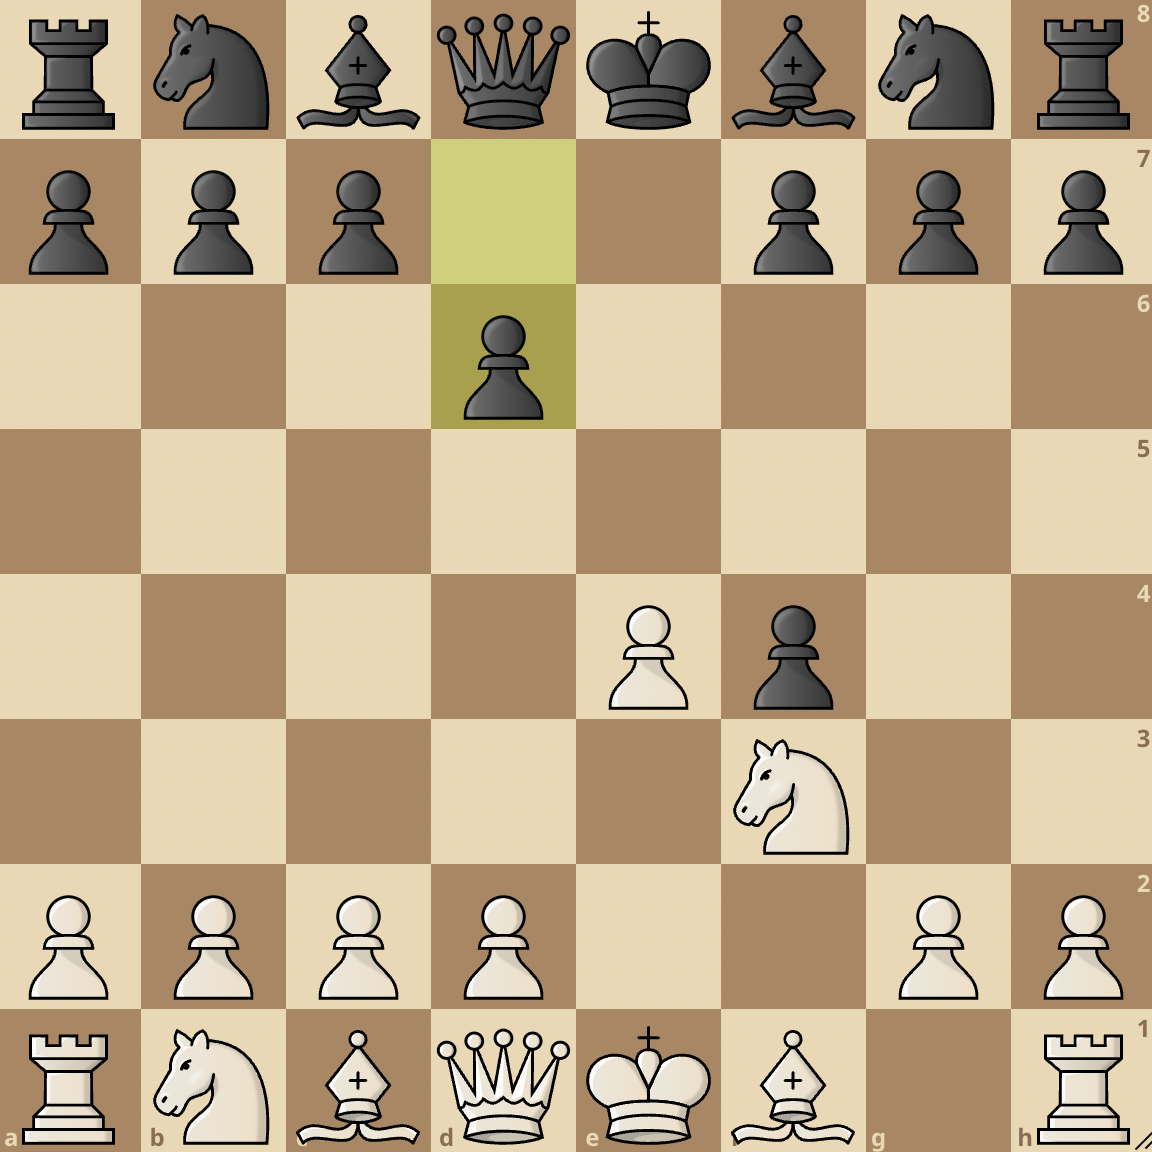 Fischer Defense, King's Gambit Accepted